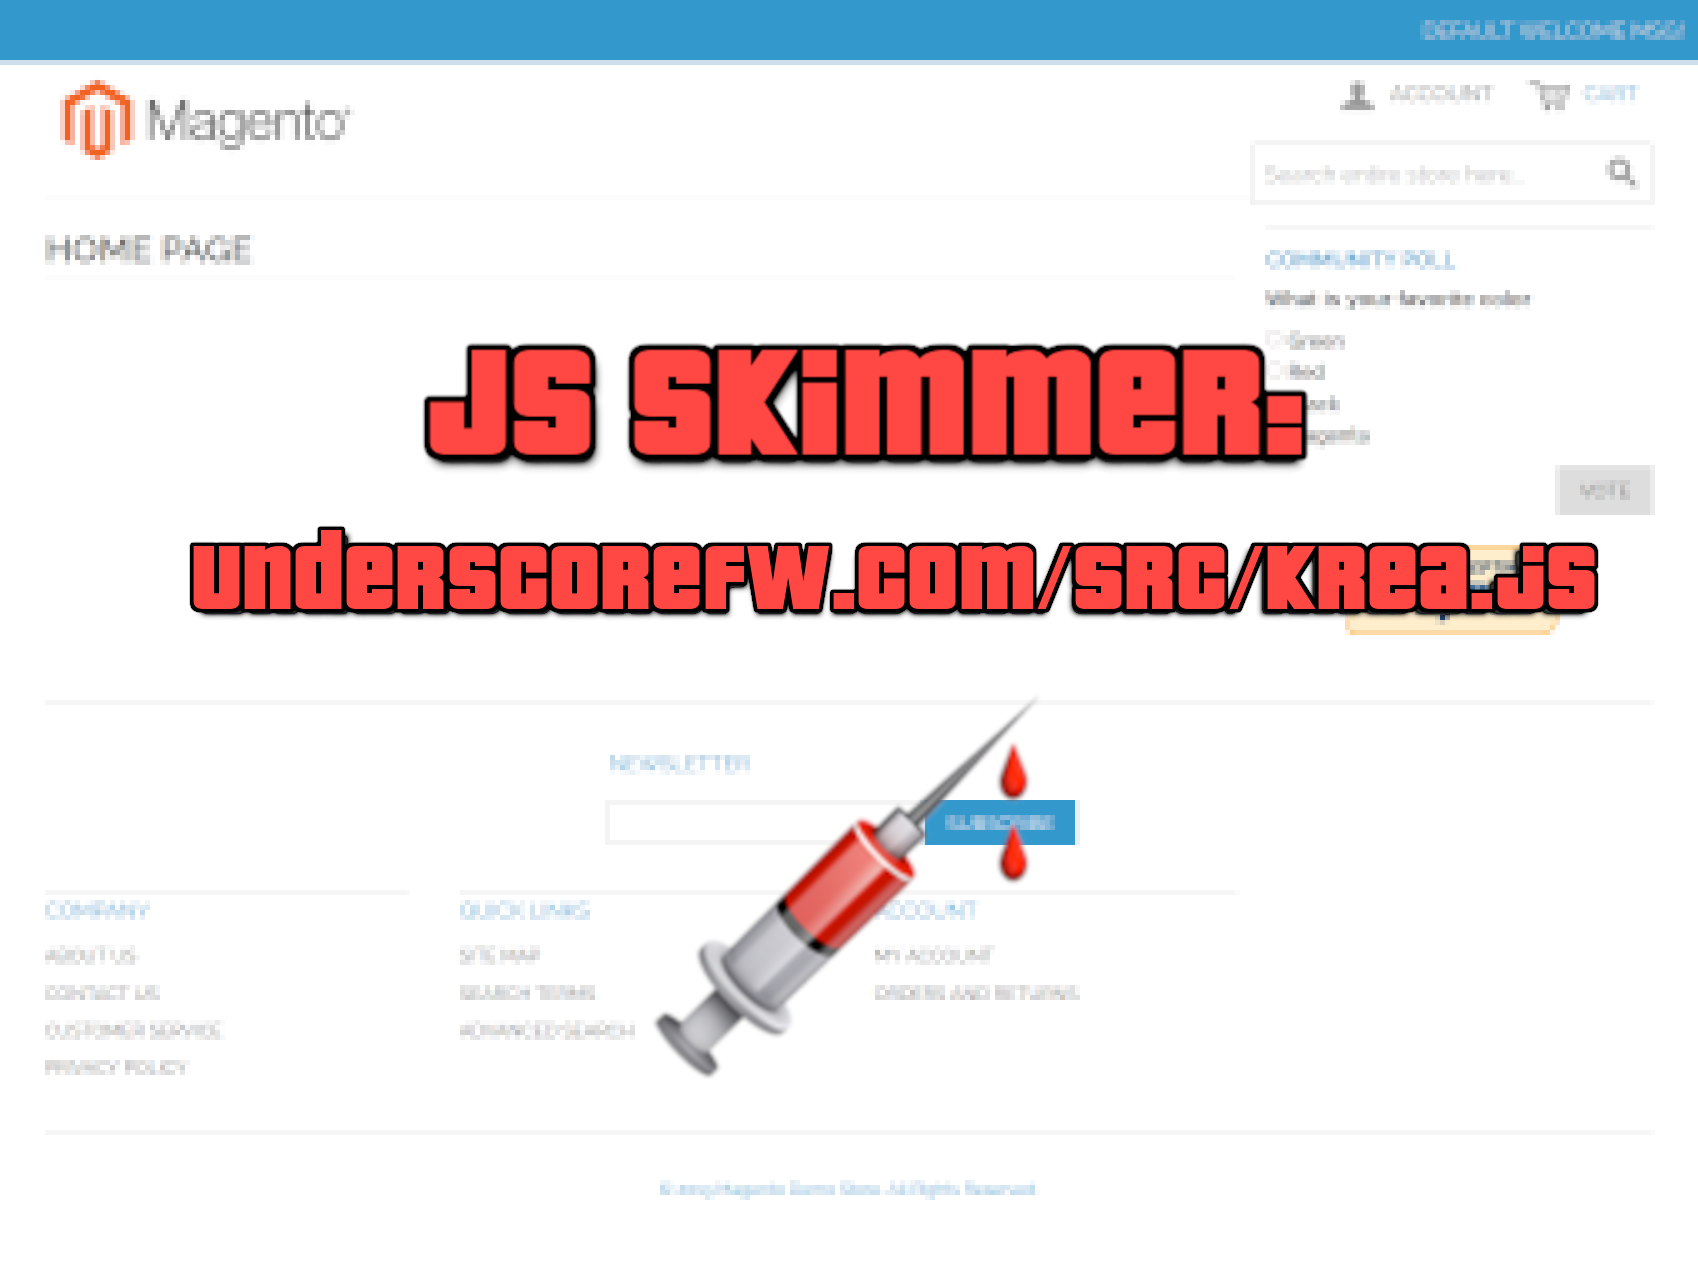 Magento PHP Injection Loads JS Skimmer